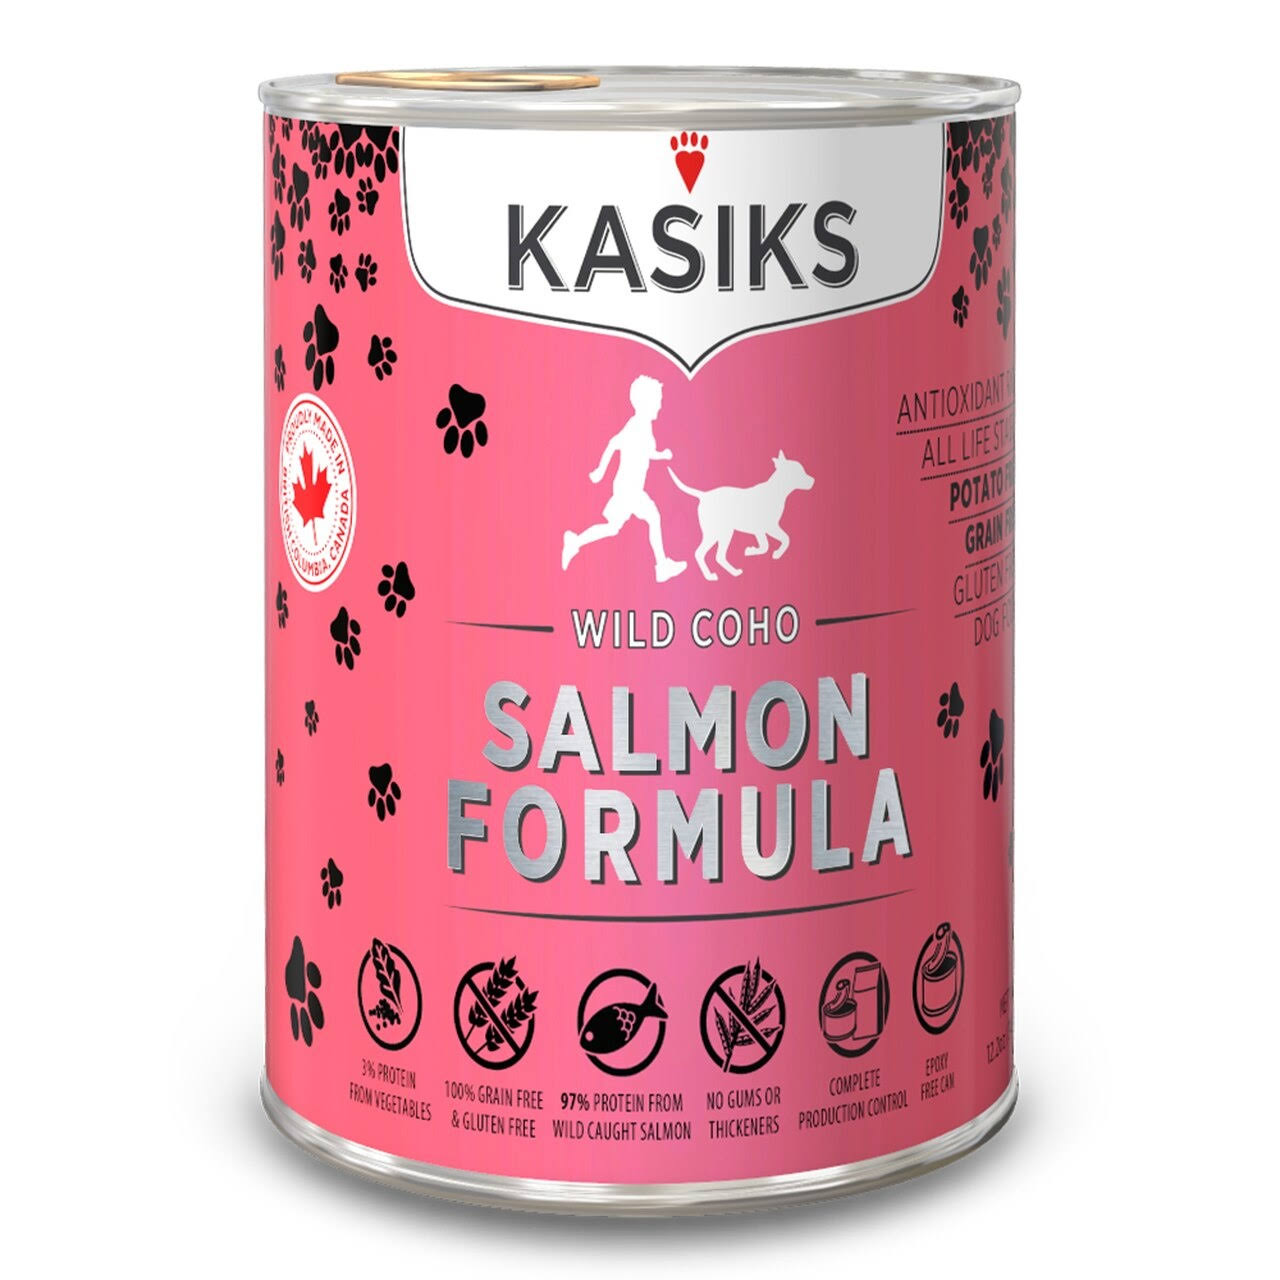 Kasiks Wild Coho Salmon Formula Grain-Free Canned Dog Food, 12.2-oz